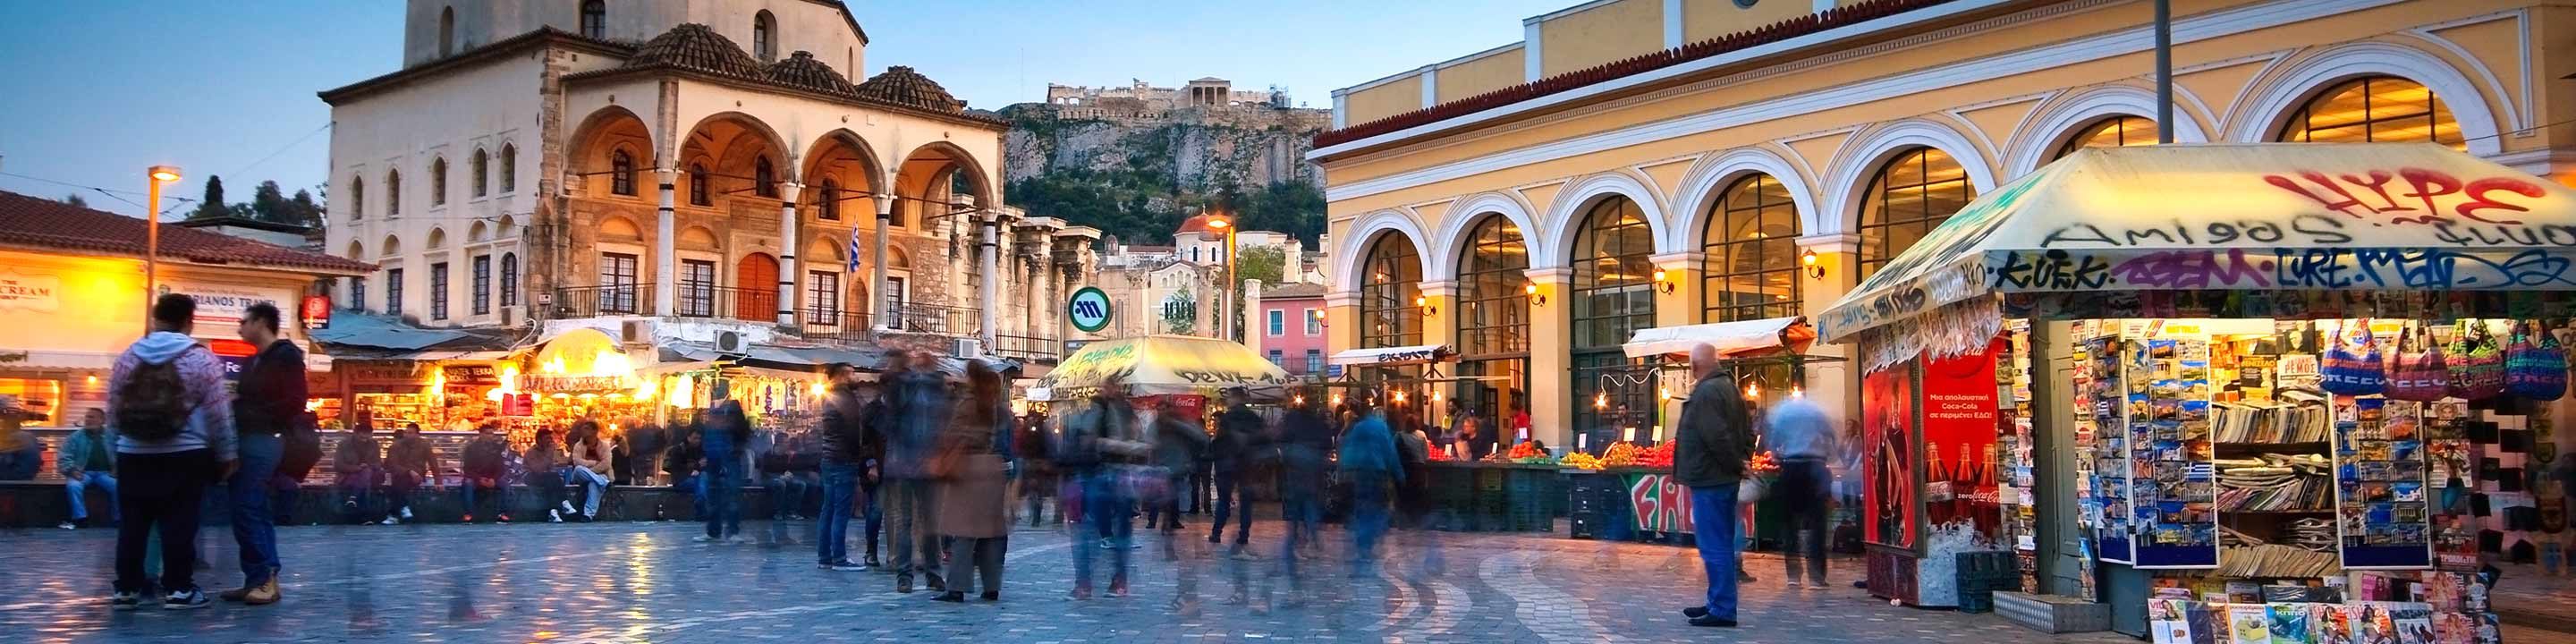  Monastiraki Square in Athens